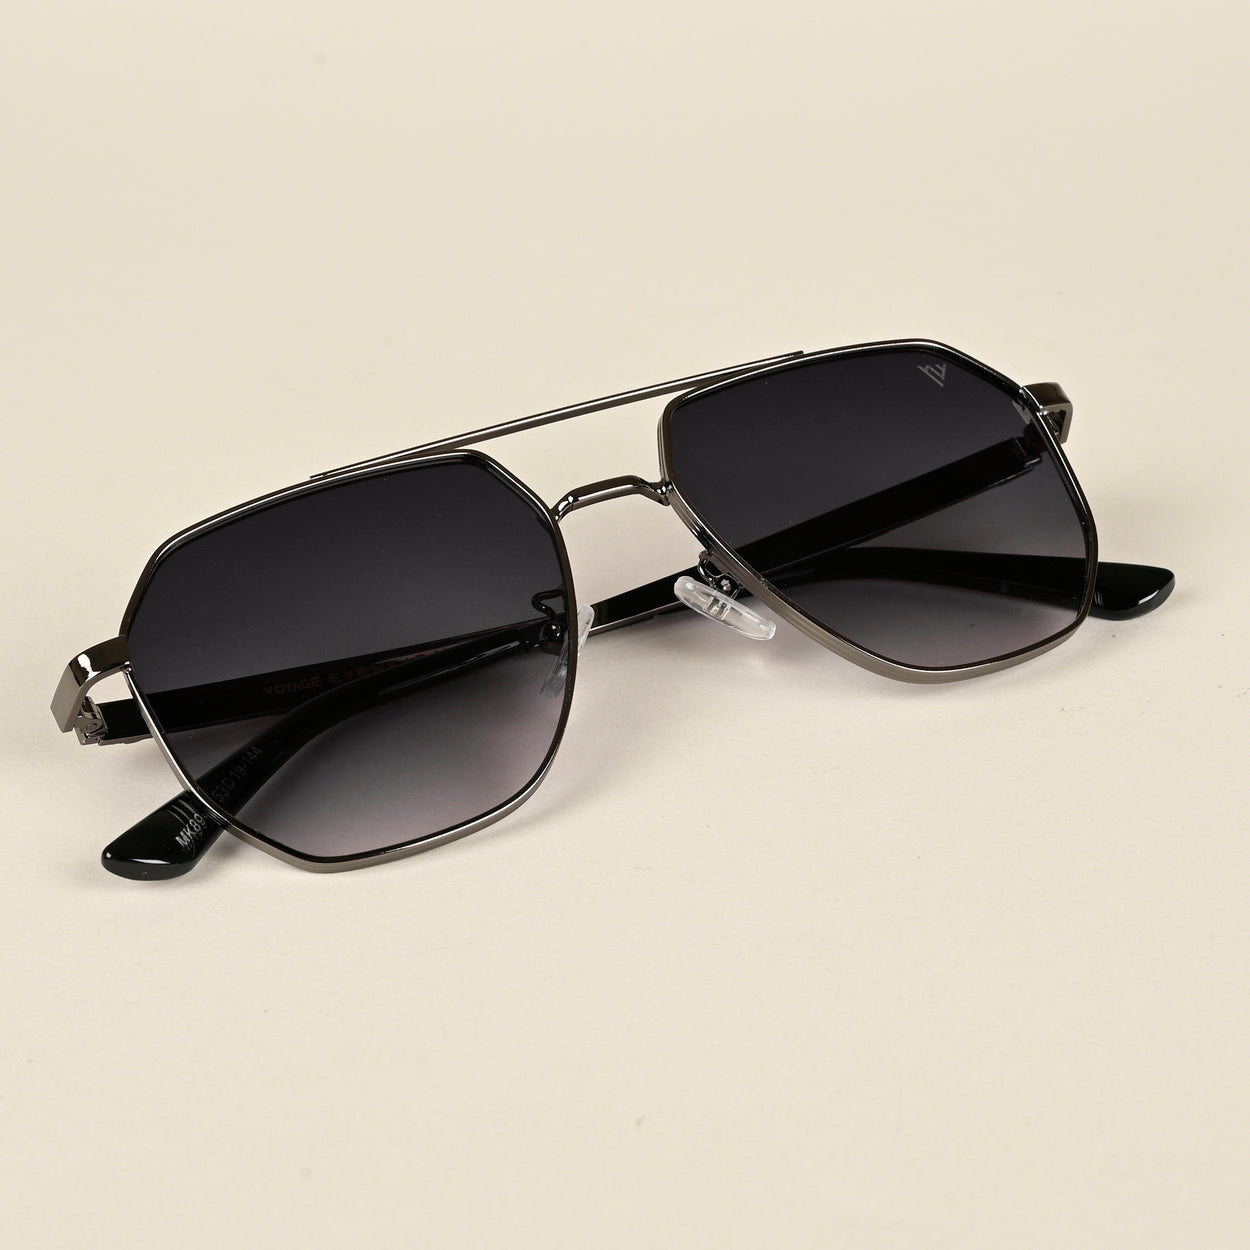 Voyage Grey weyfarer Sunglasses for Men & Women (8949MG4325)